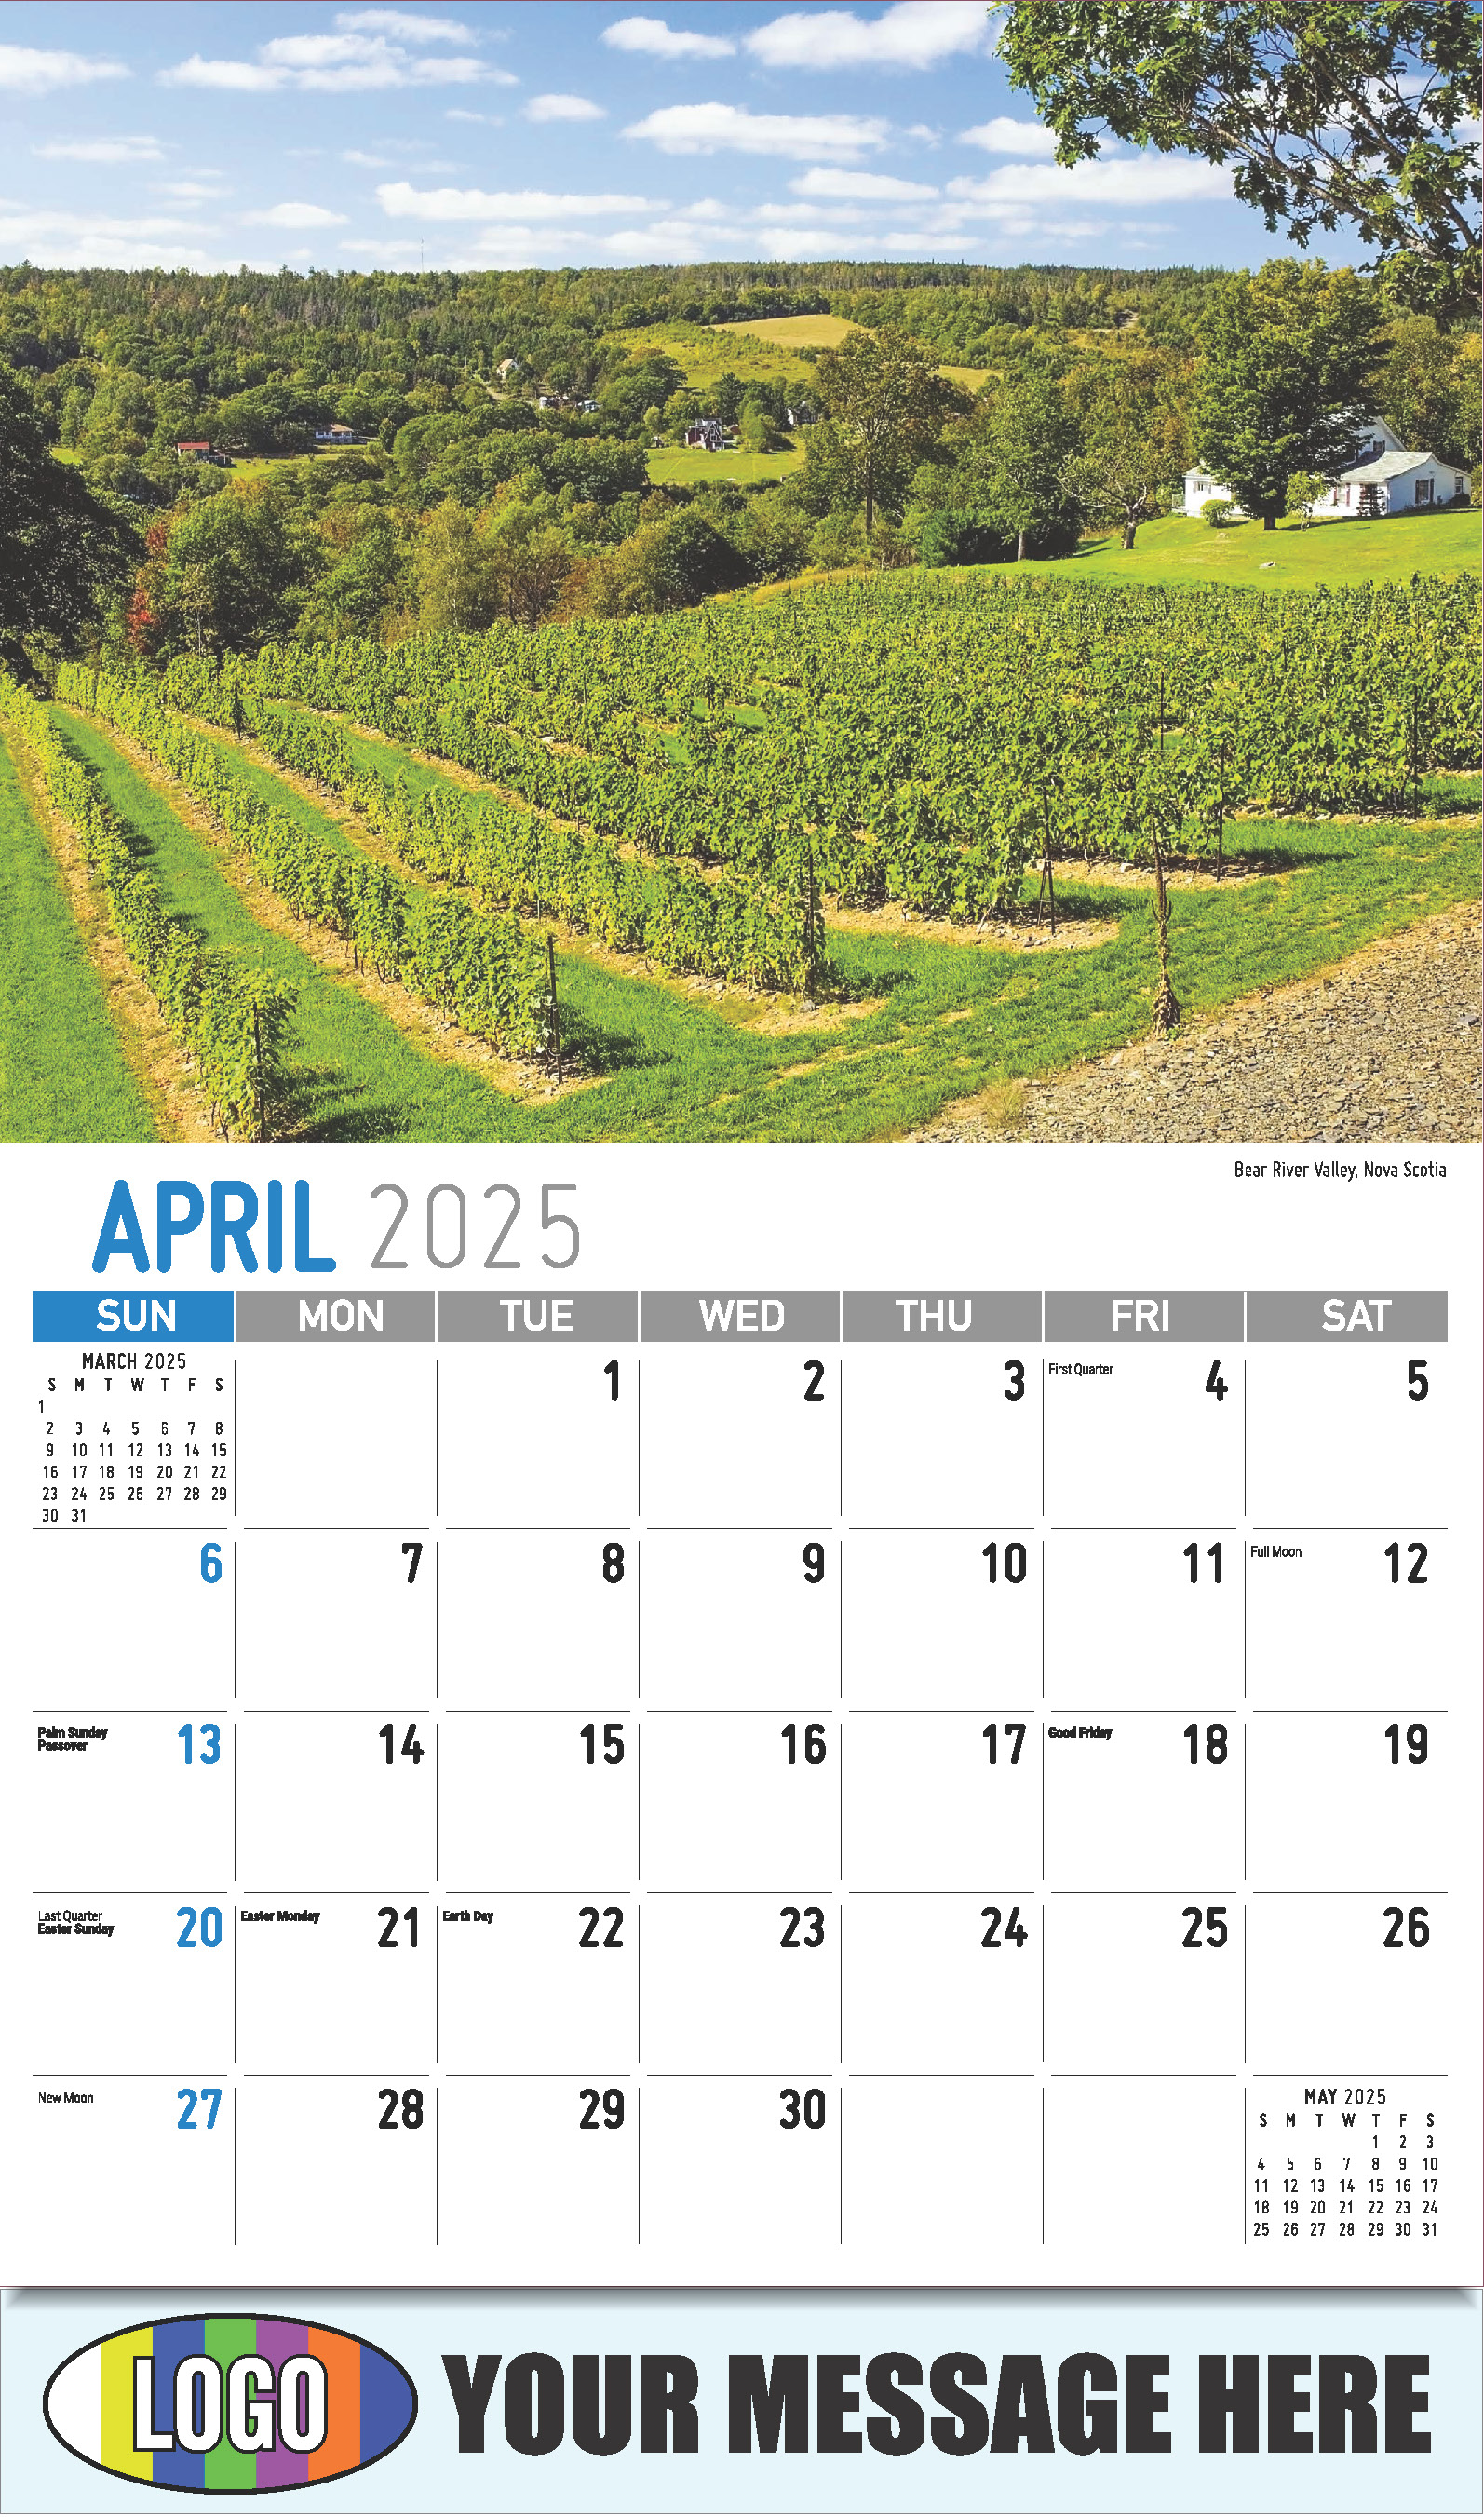 Atlantic Canada Scenic 2025 Business Promotion Calendar - April